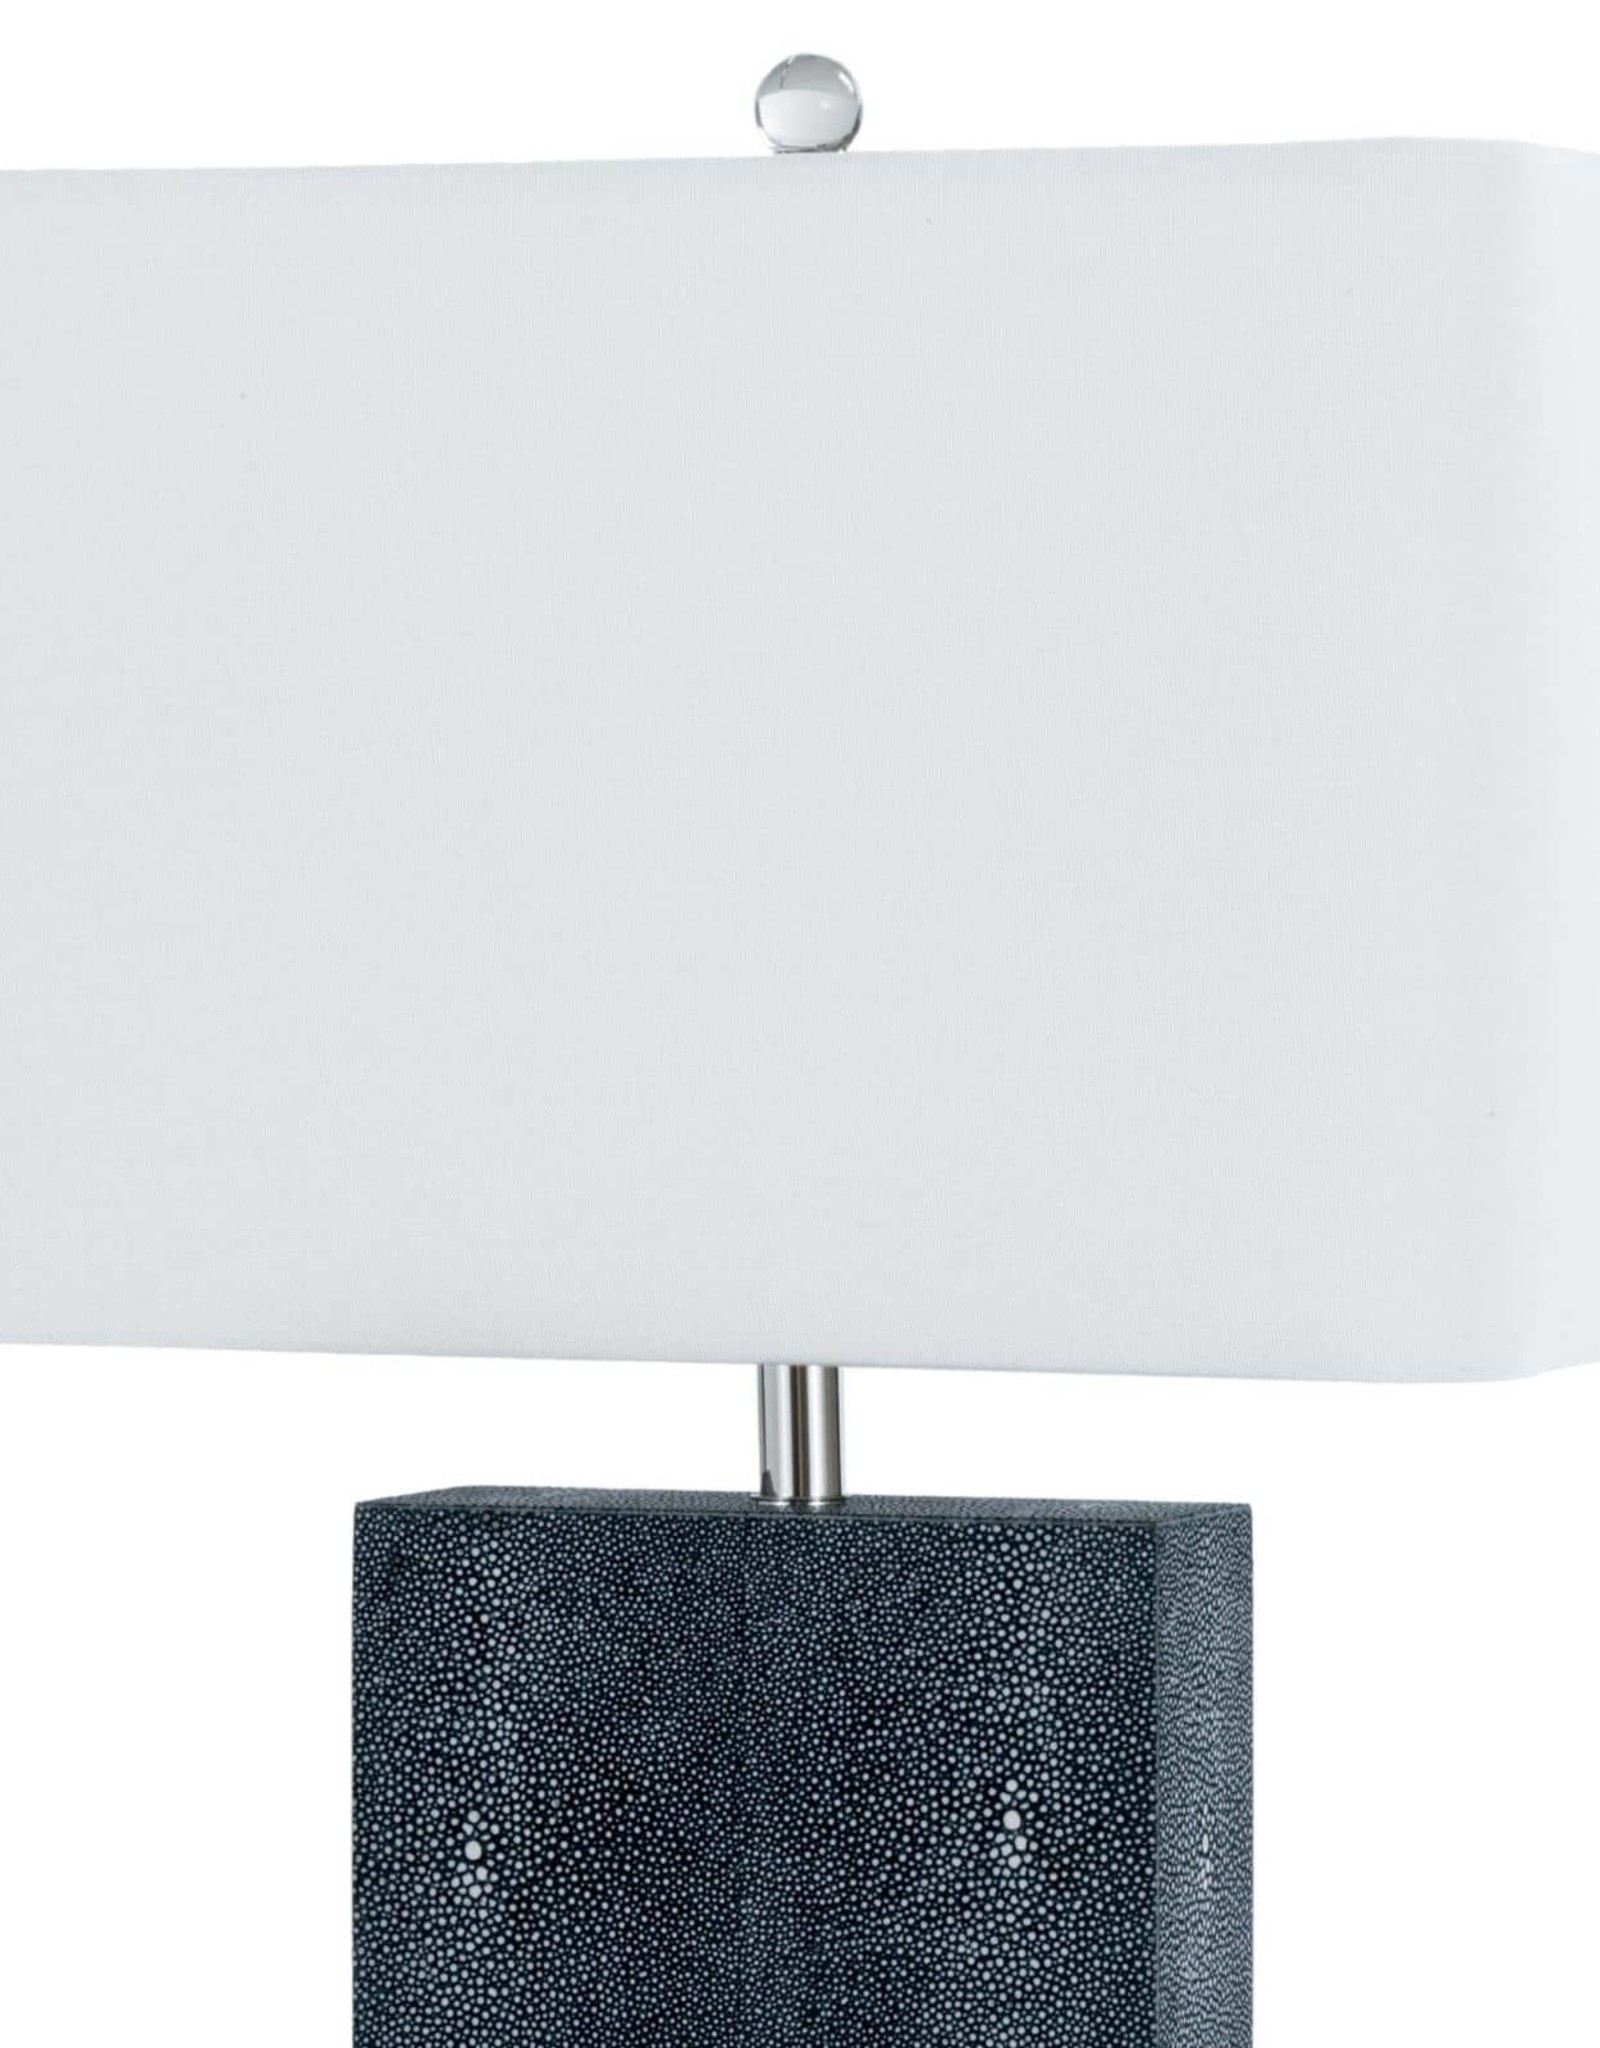 Regina Andrew Design Marcel Charcoal Shagreen Table Lamp